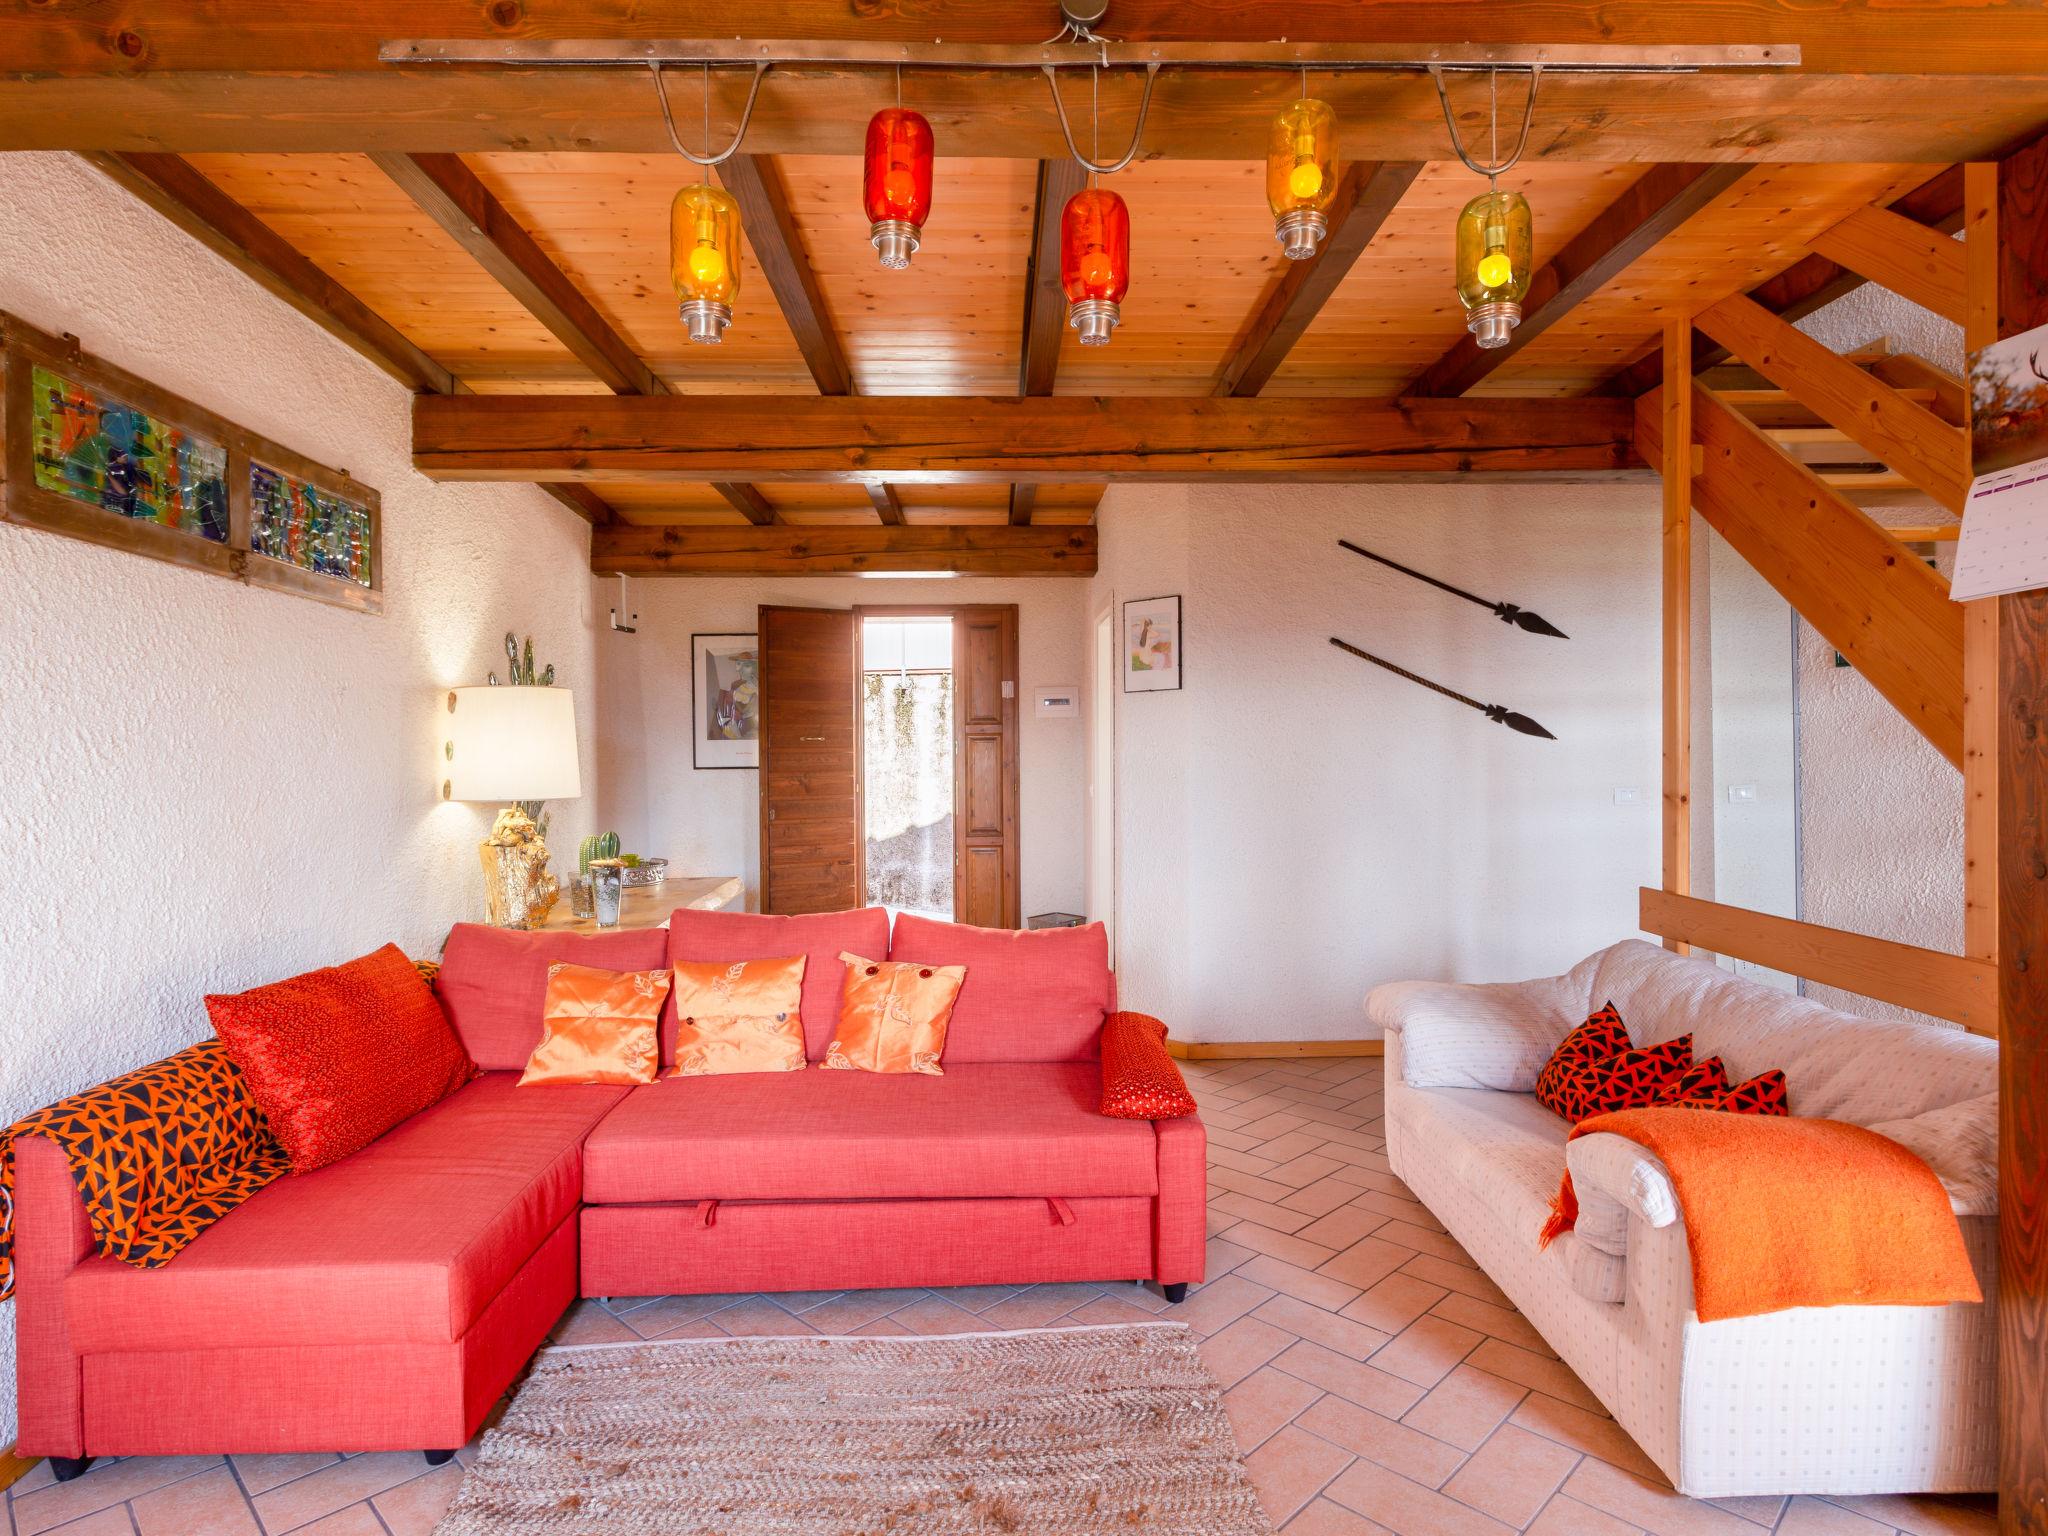 Foto 4 - Haus mit 2 Schlafzimmern in Bagni di Lucca mit privater pool und terrasse